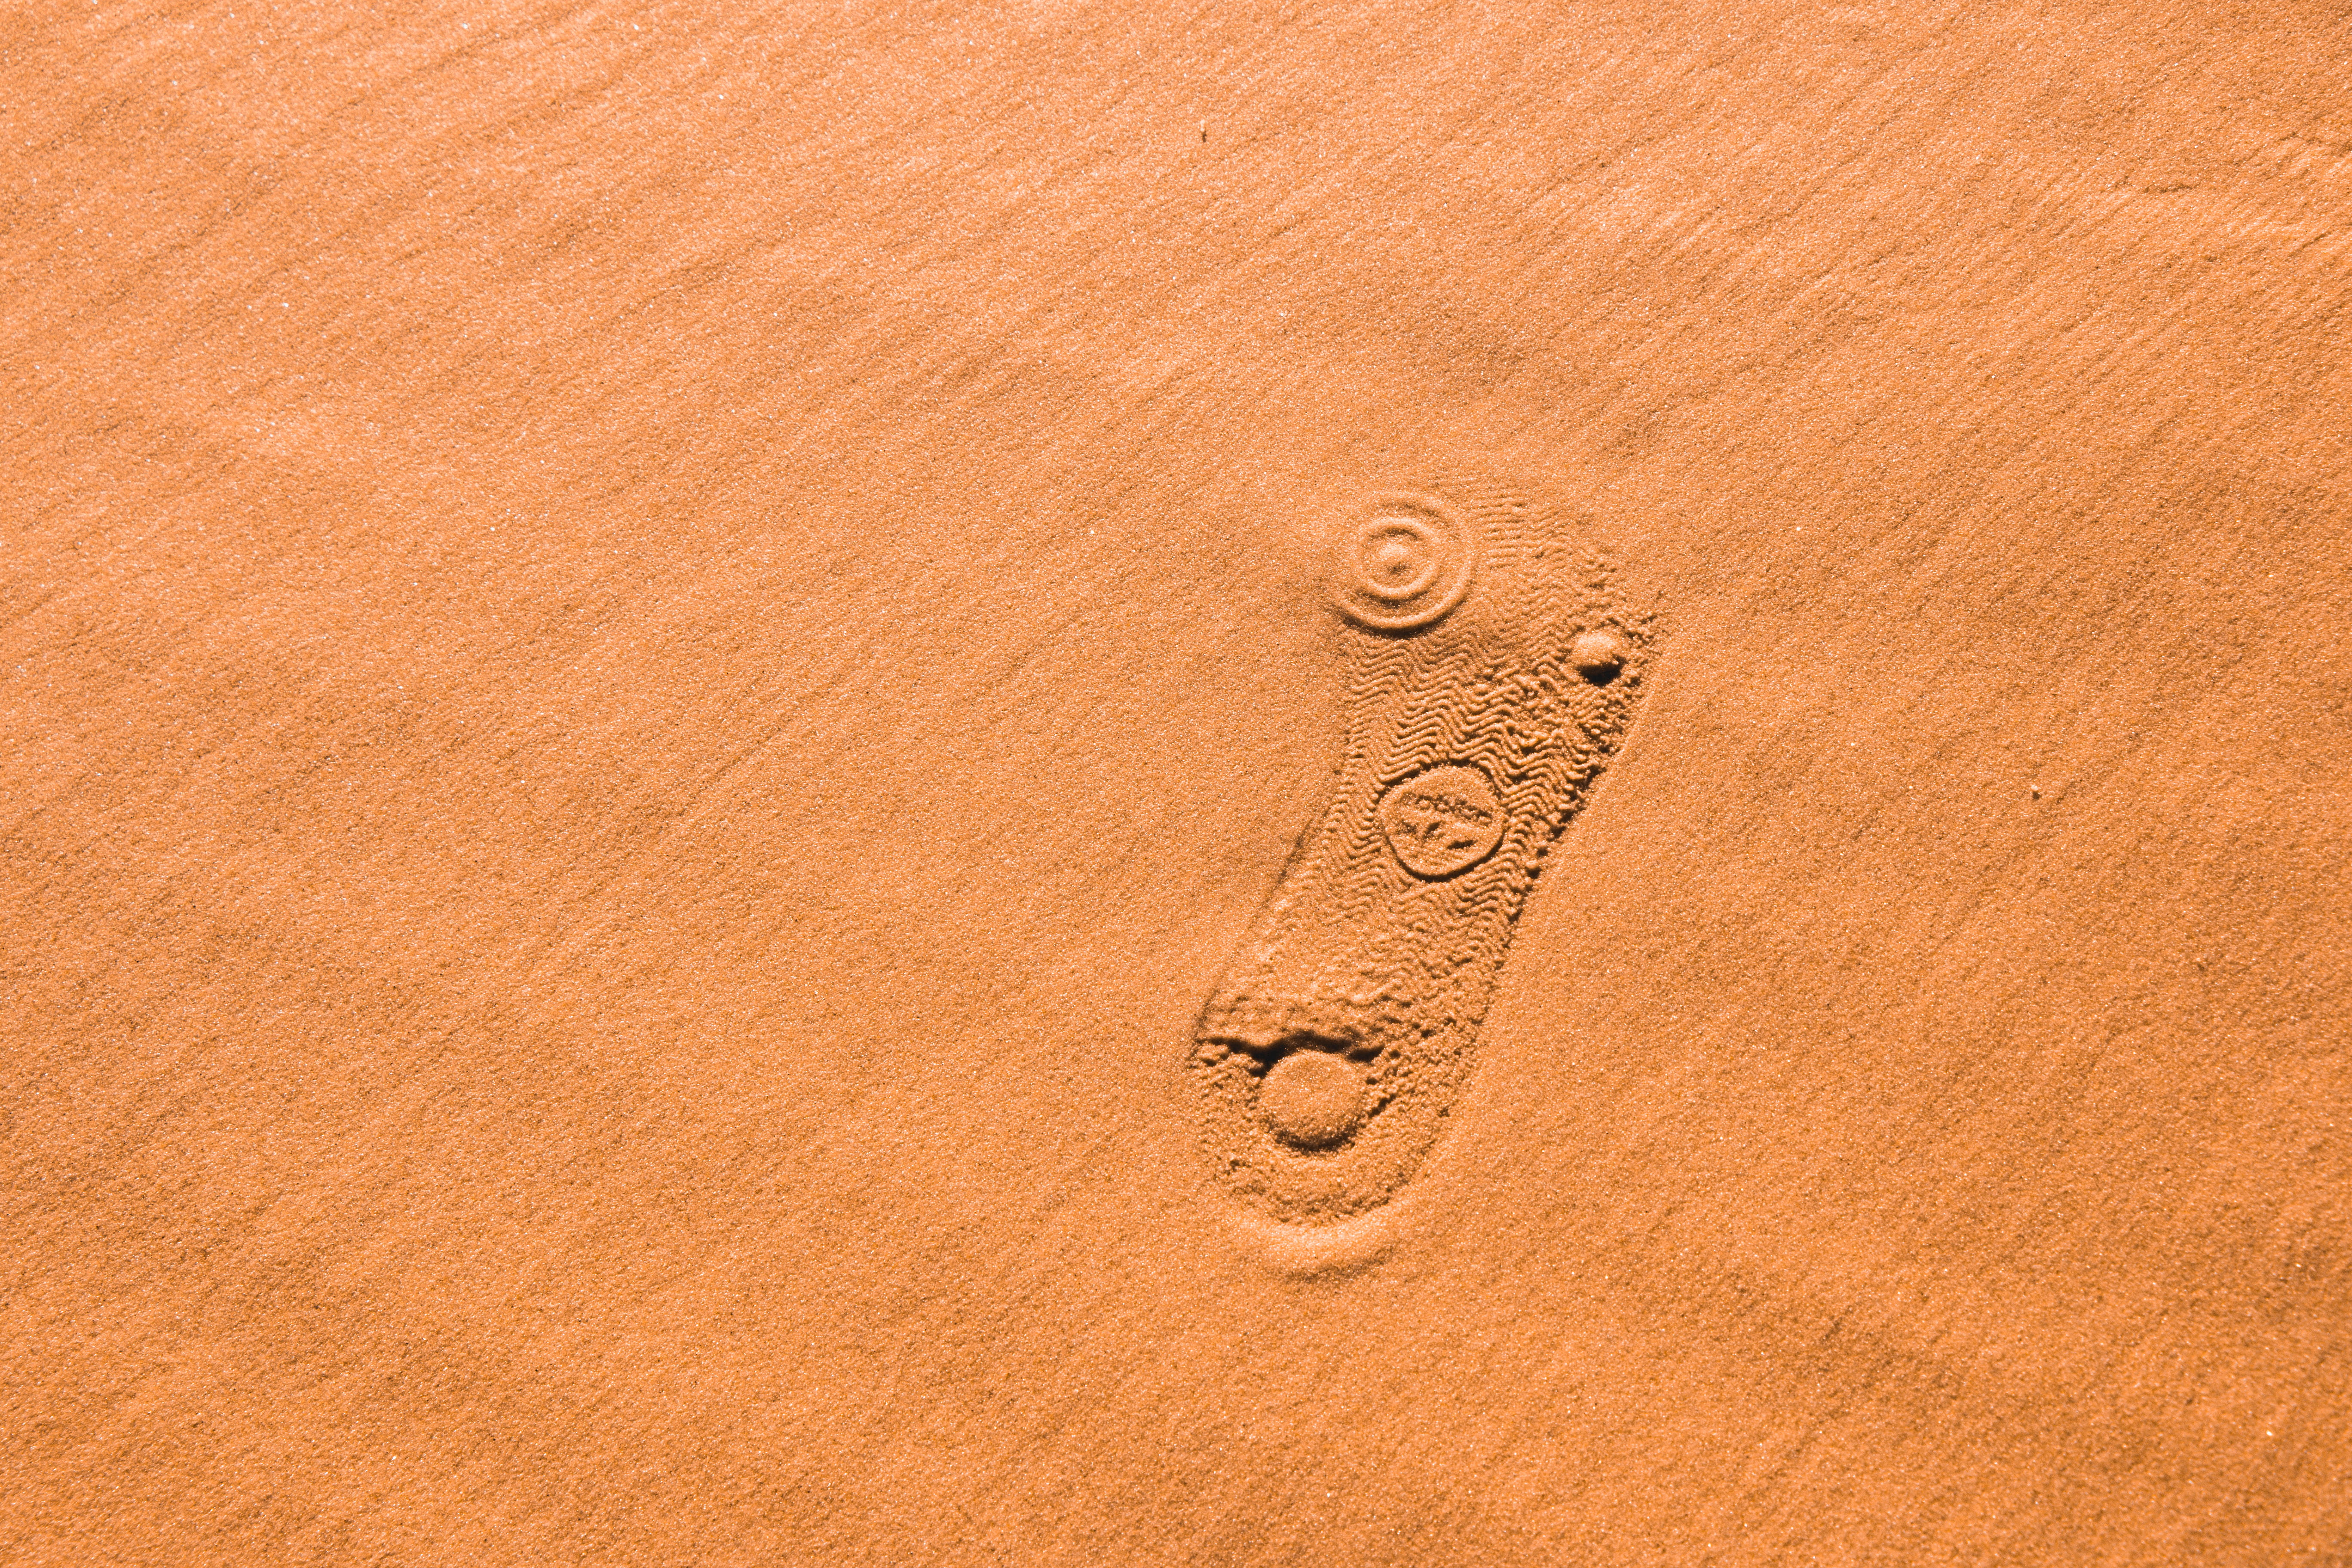 shoe print on sand, outdoors, nature, kingscliffe, australia